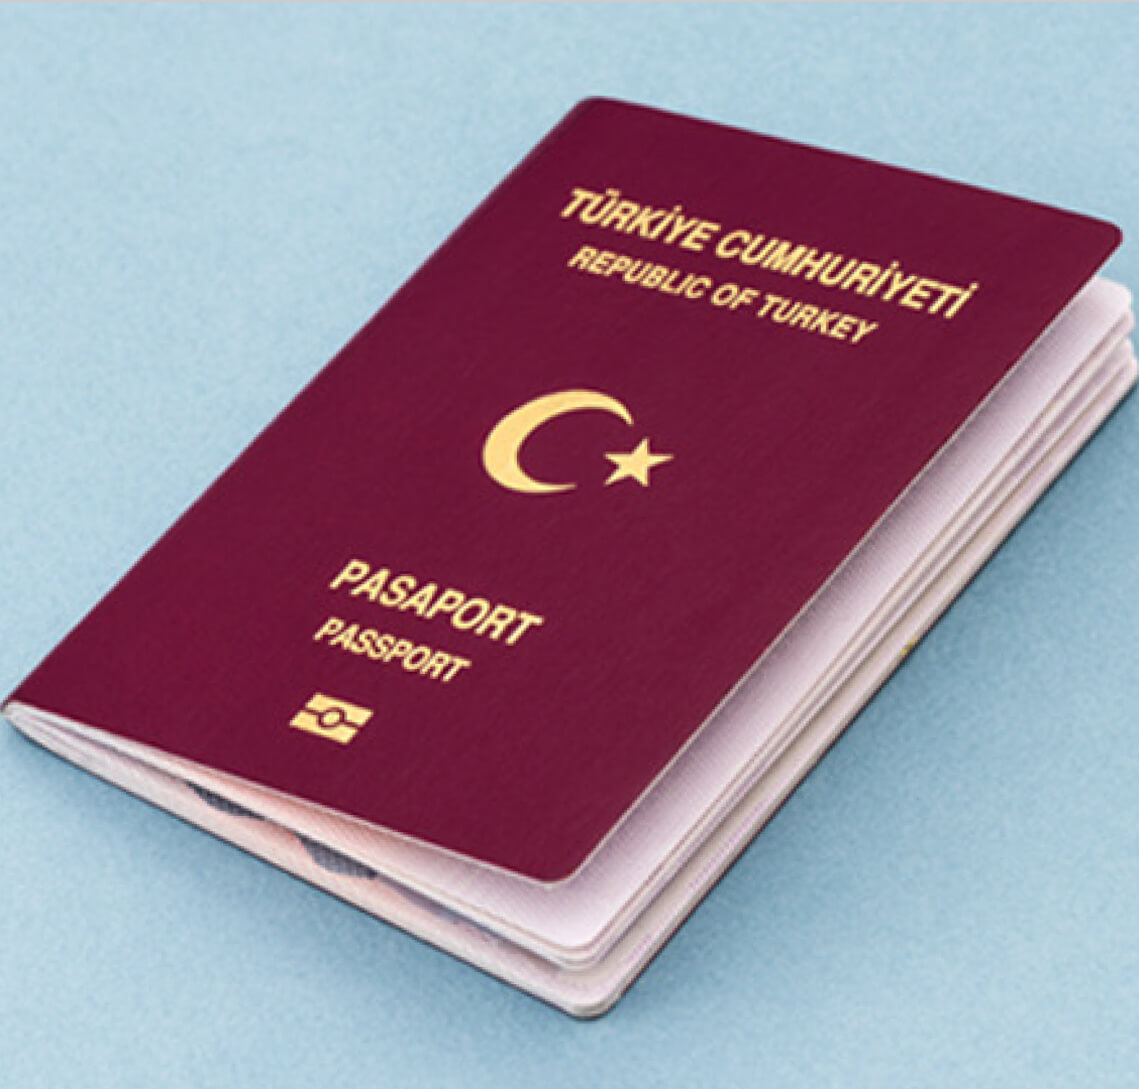 Who can take turkish passport